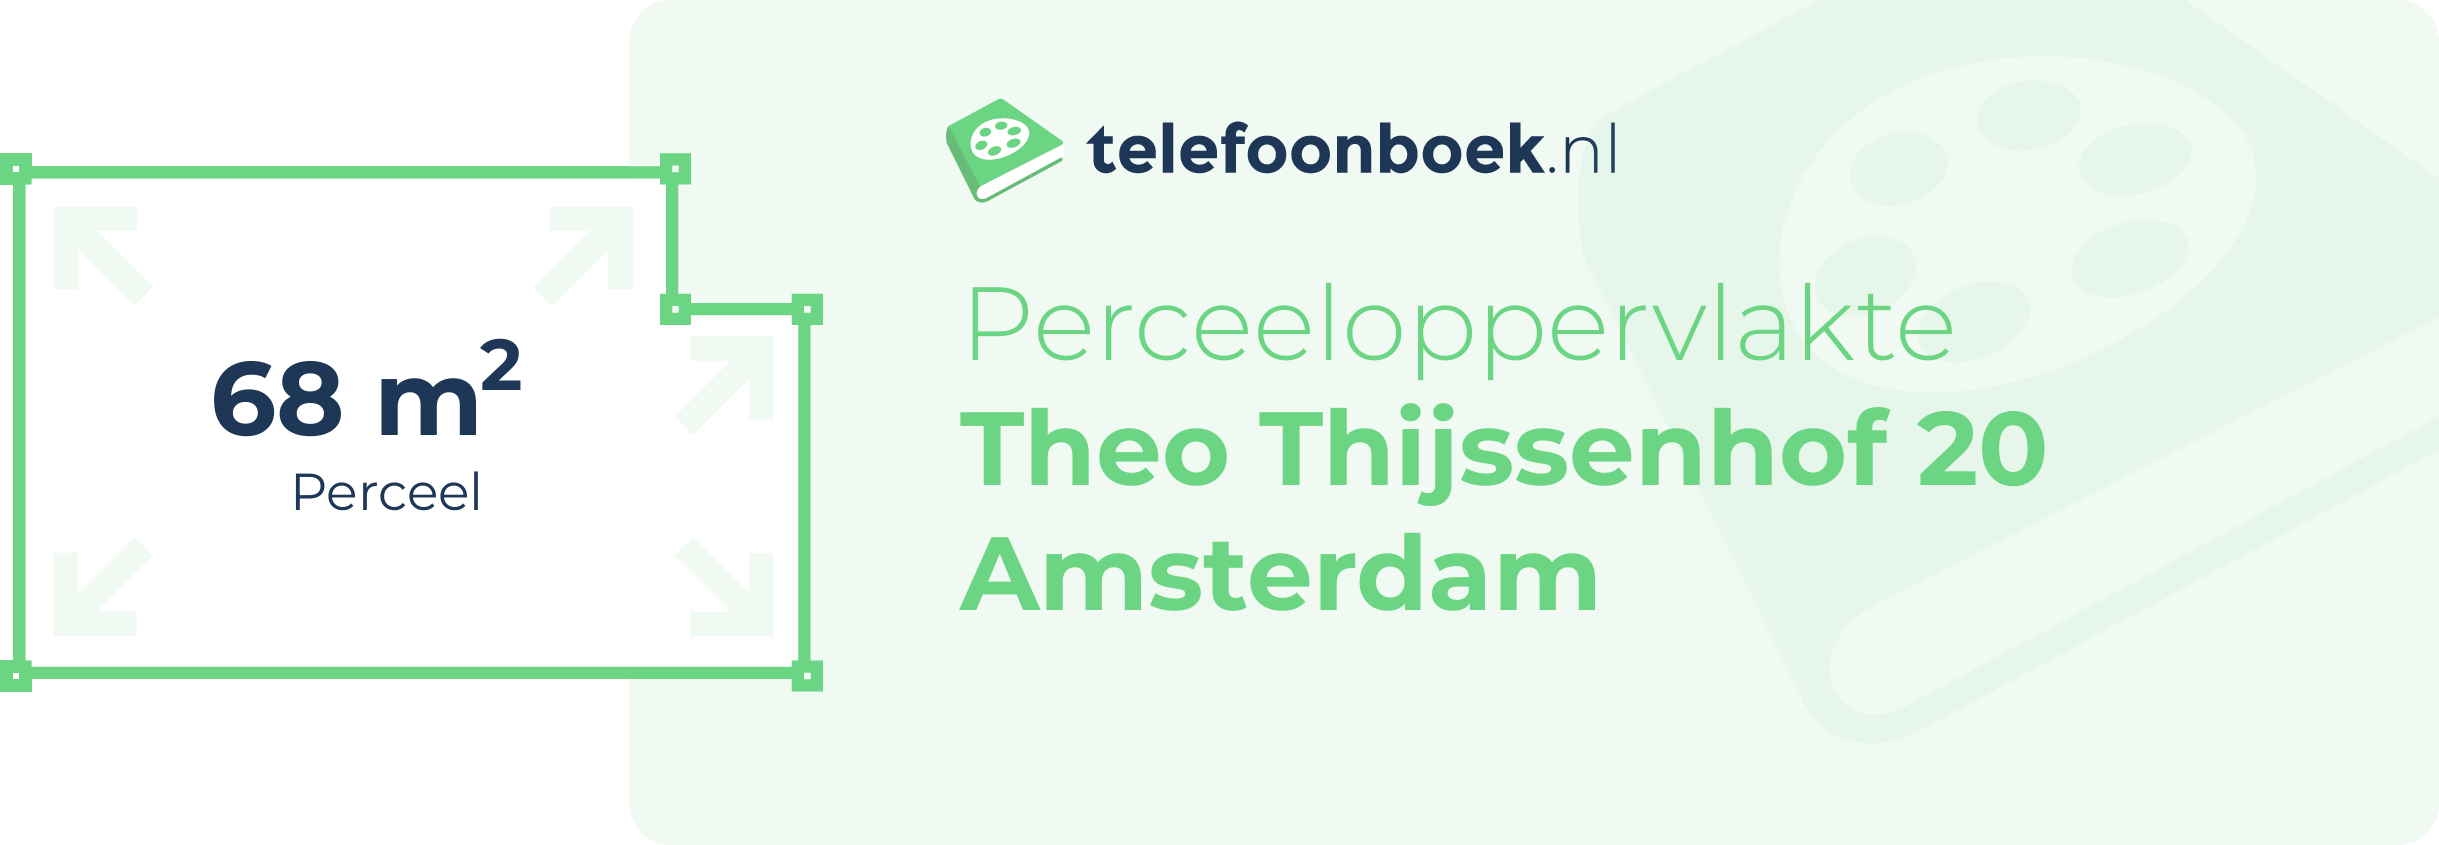 Perceeloppervlakte Theo Thijssenhof 20 Amsterdam